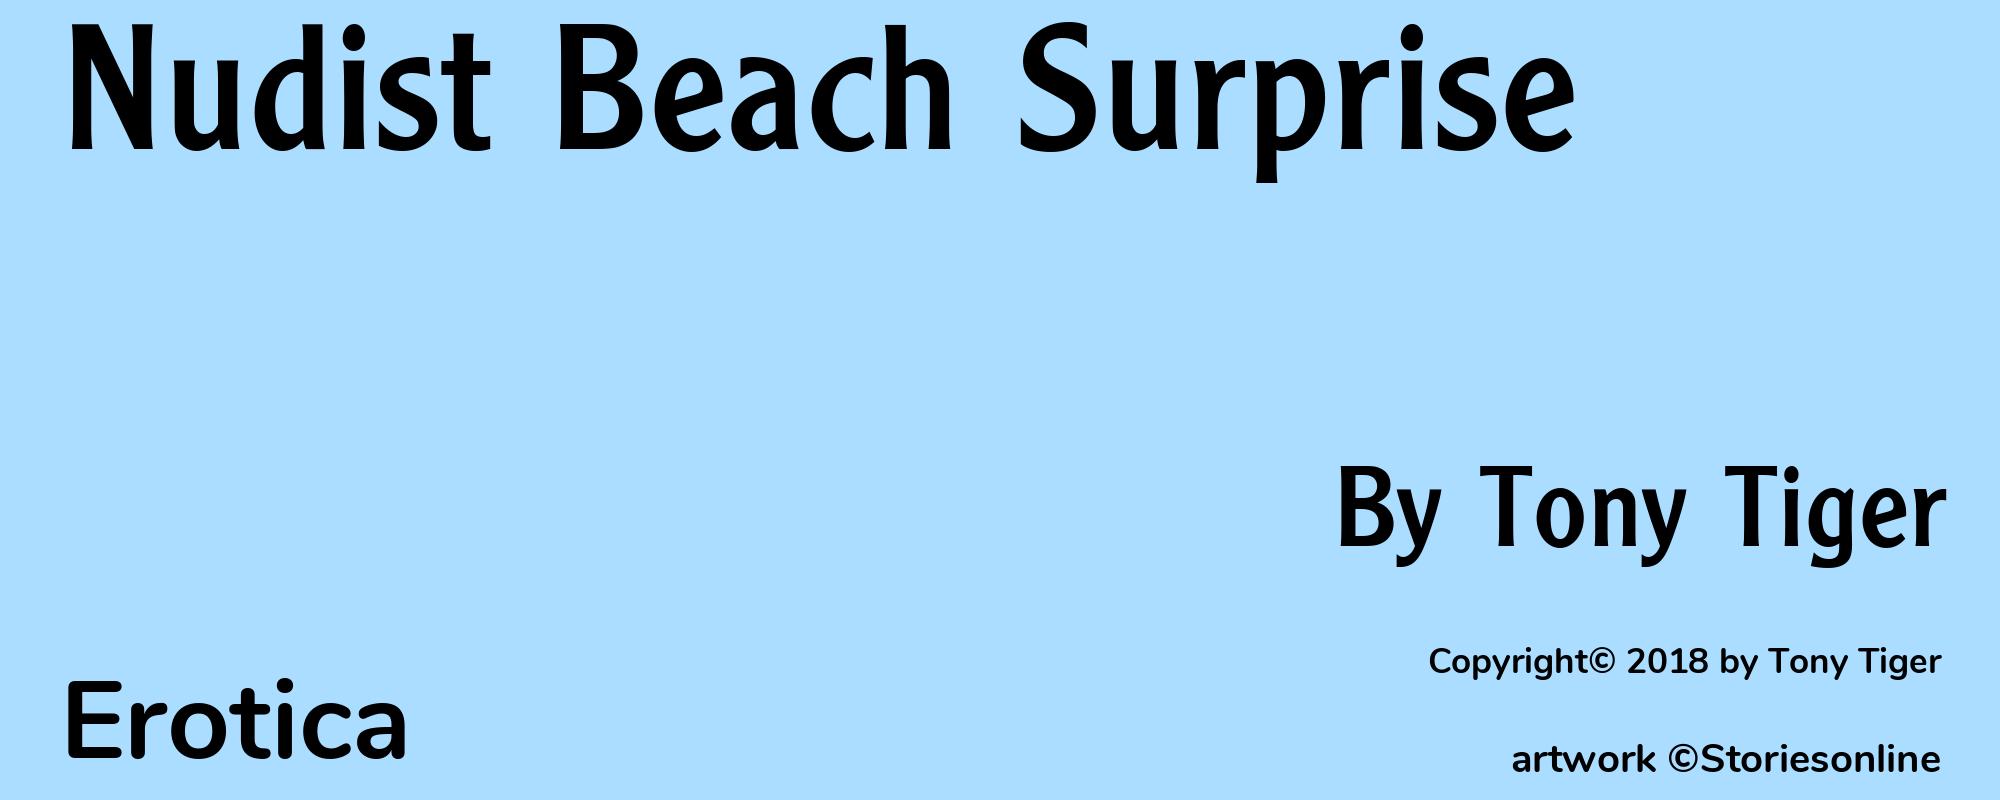 Nudist Beach Surprise - Cover